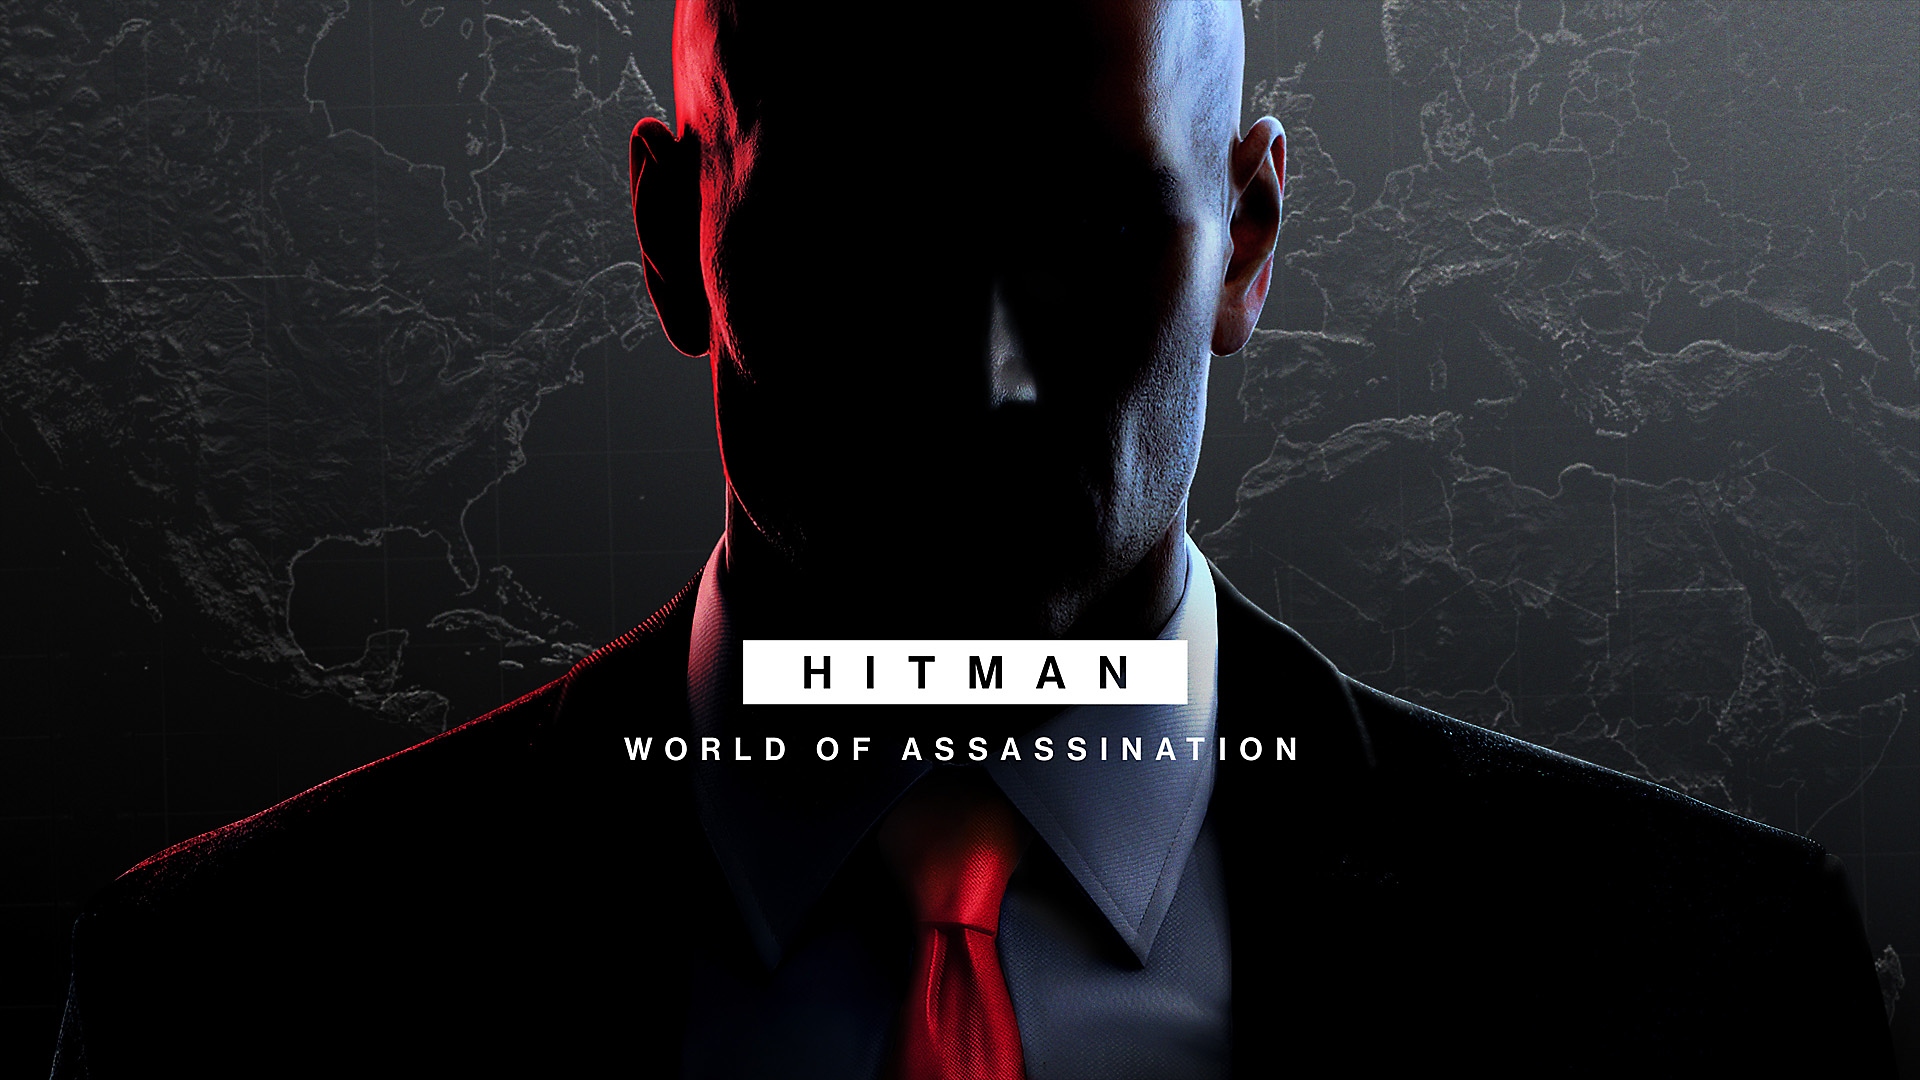 Hitman World of Assassination launch trailer